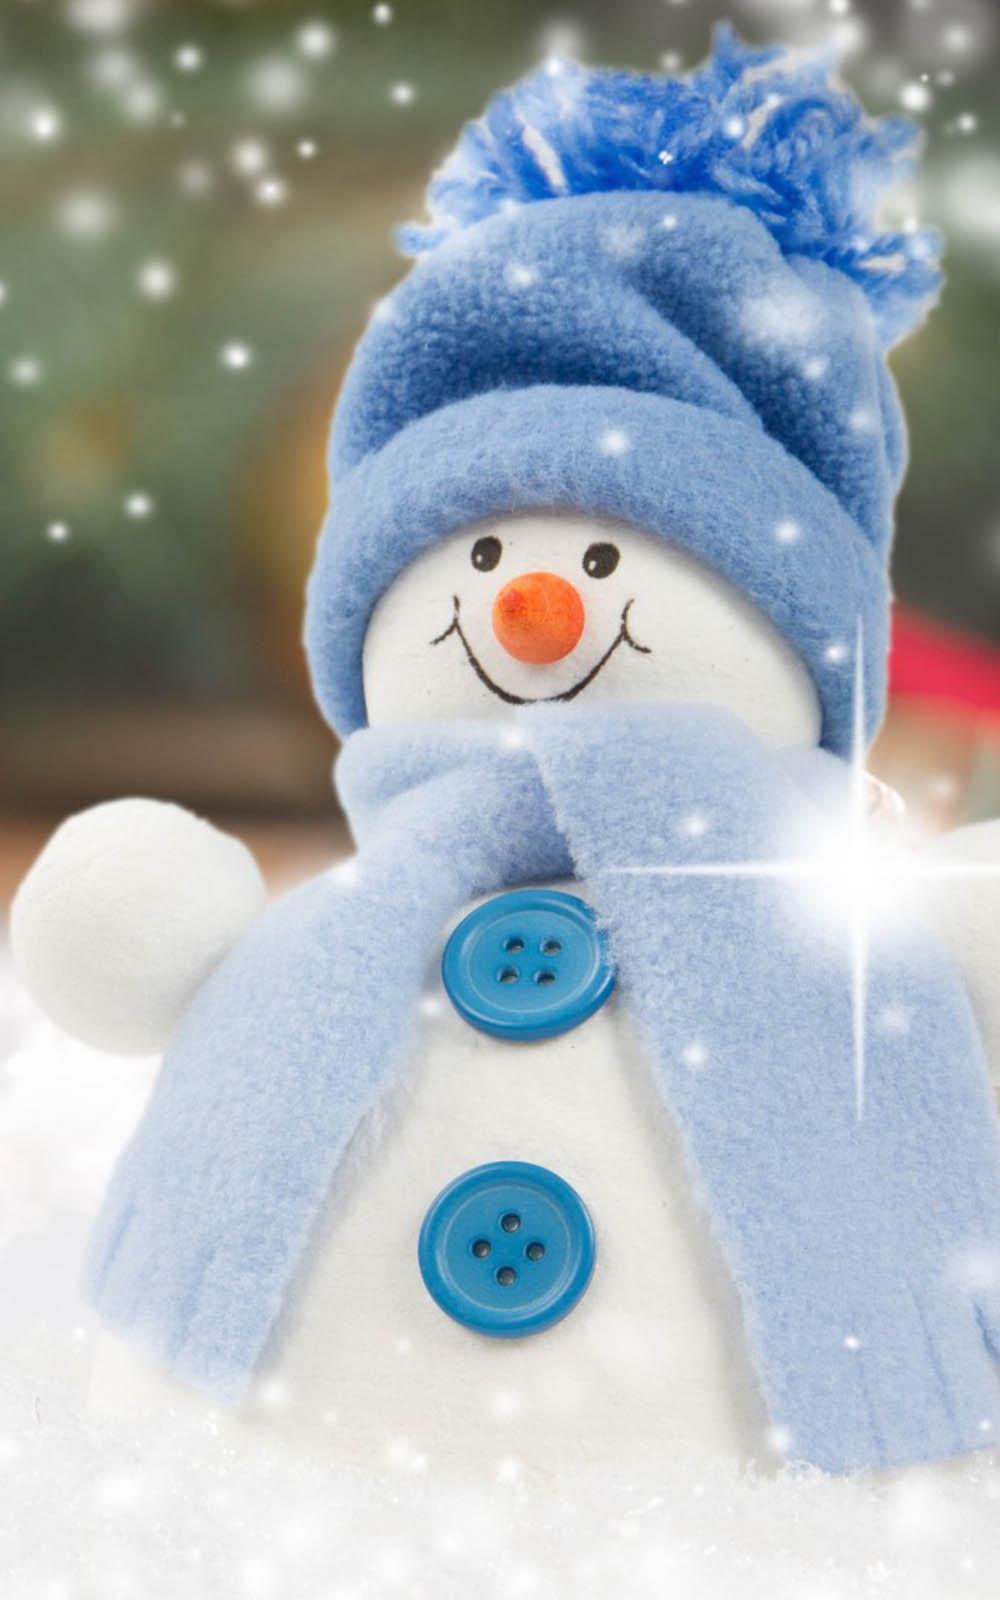 Cute Christmas Snowman 4K Ultra HD Mobile Wallpaper